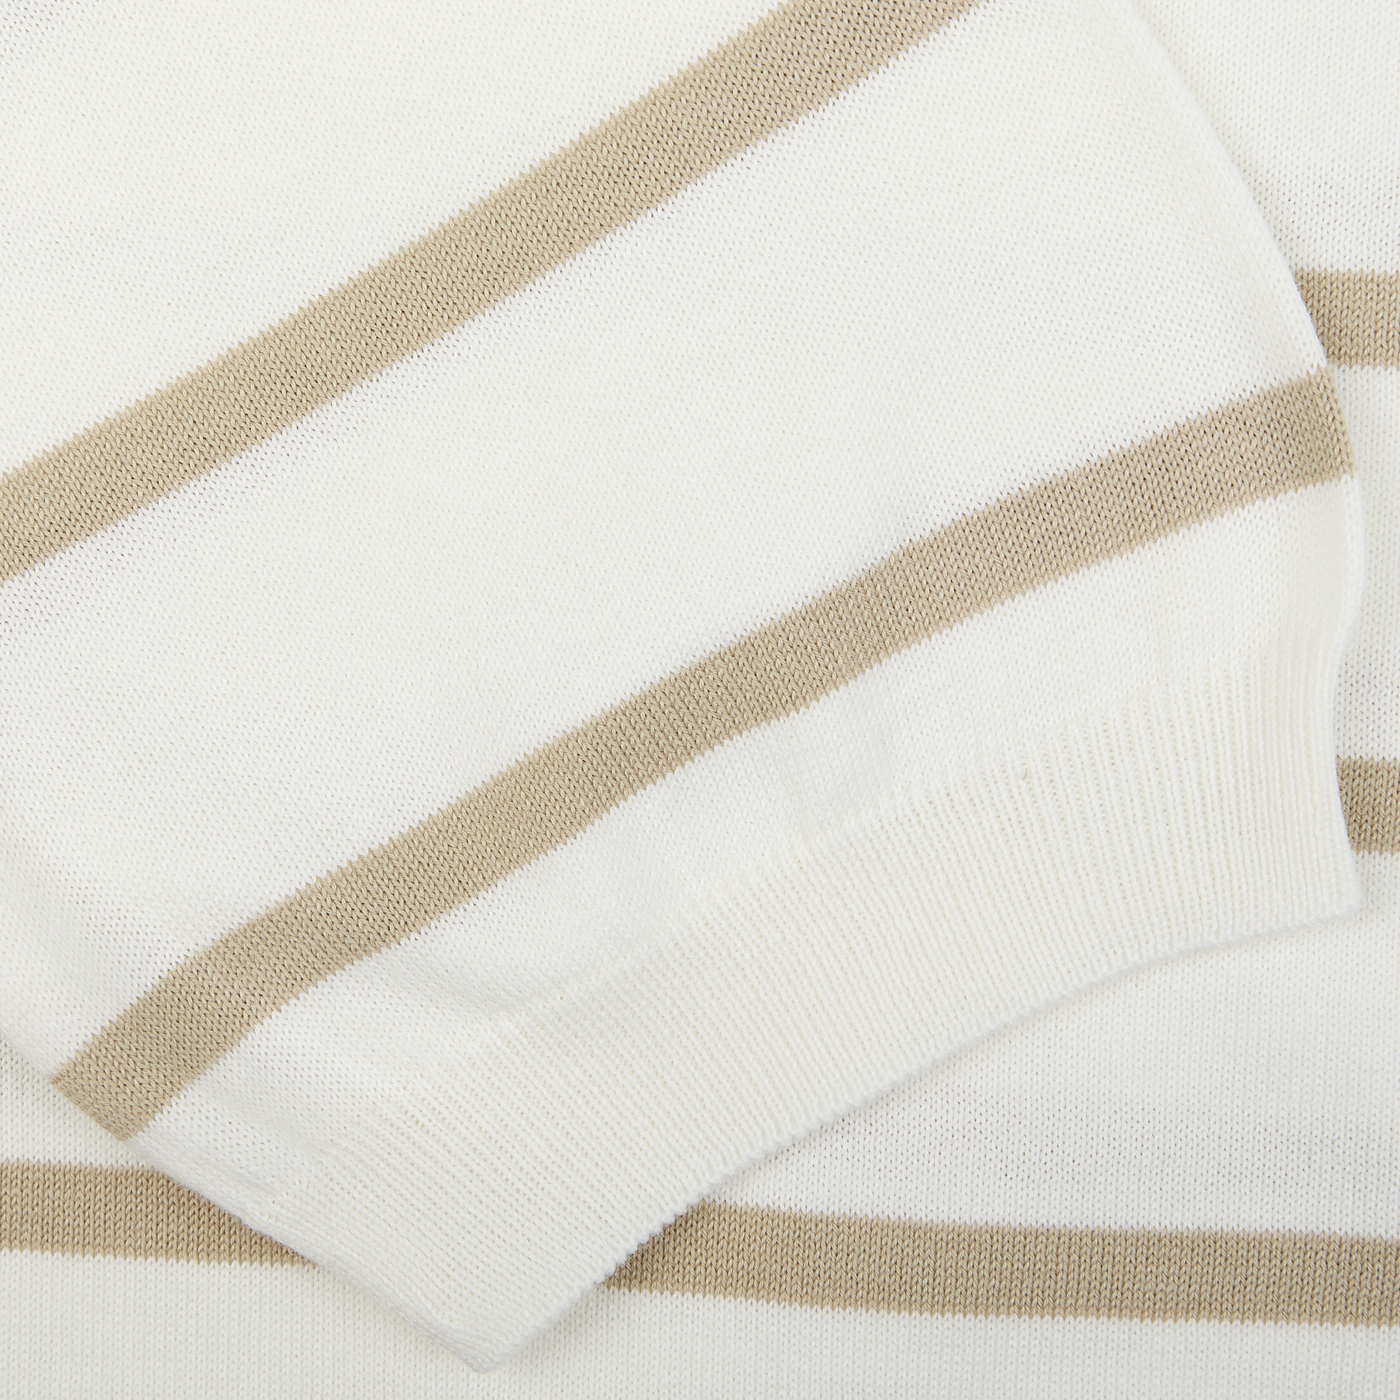 Close-up of a Gran Sasso Cream Beige Striped Organic Cotton T-Shirt fabric.